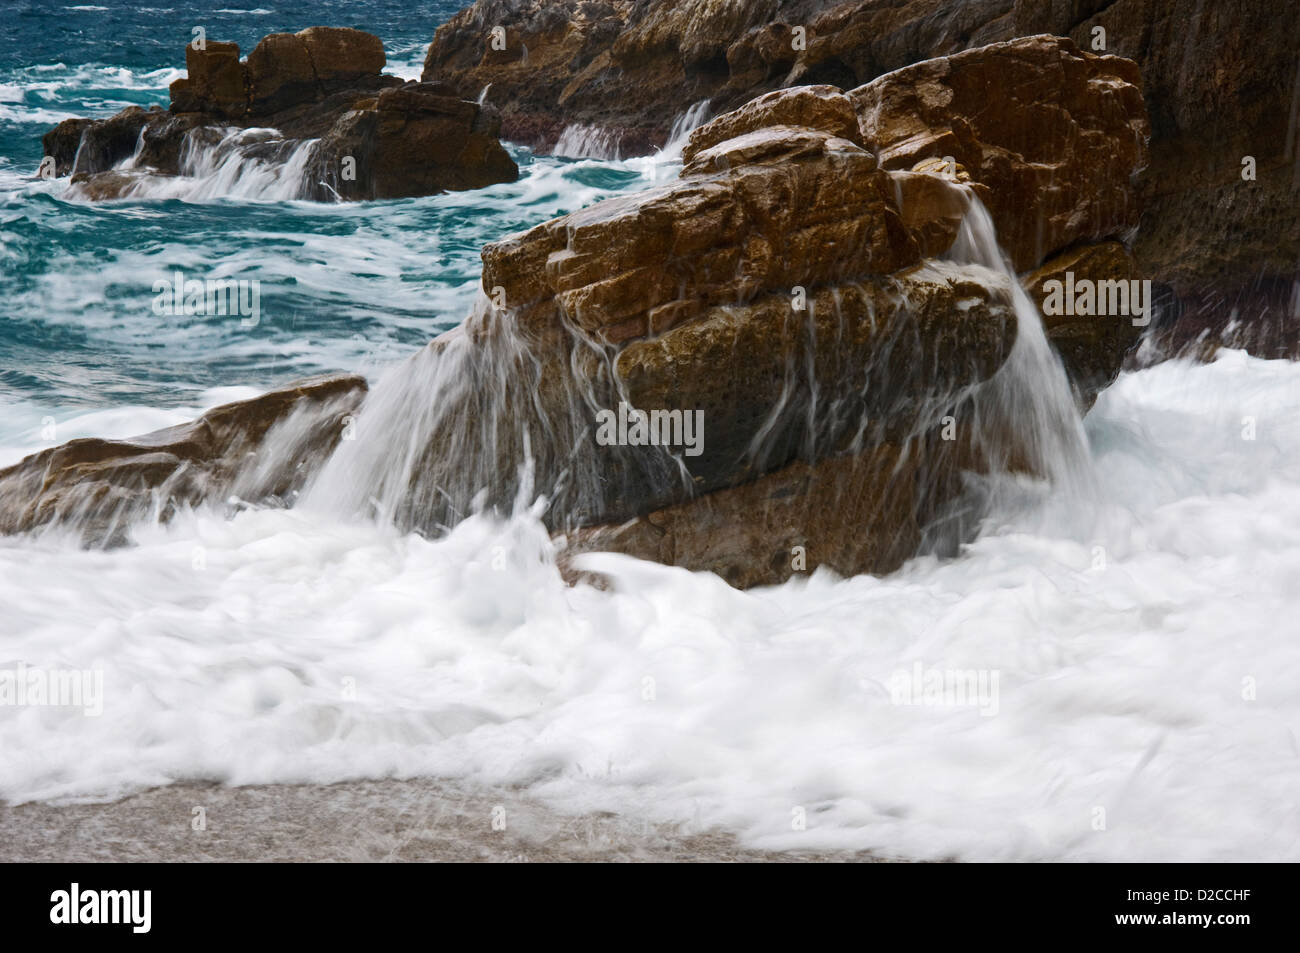 Waves breaking on rocky beach Stock Photo